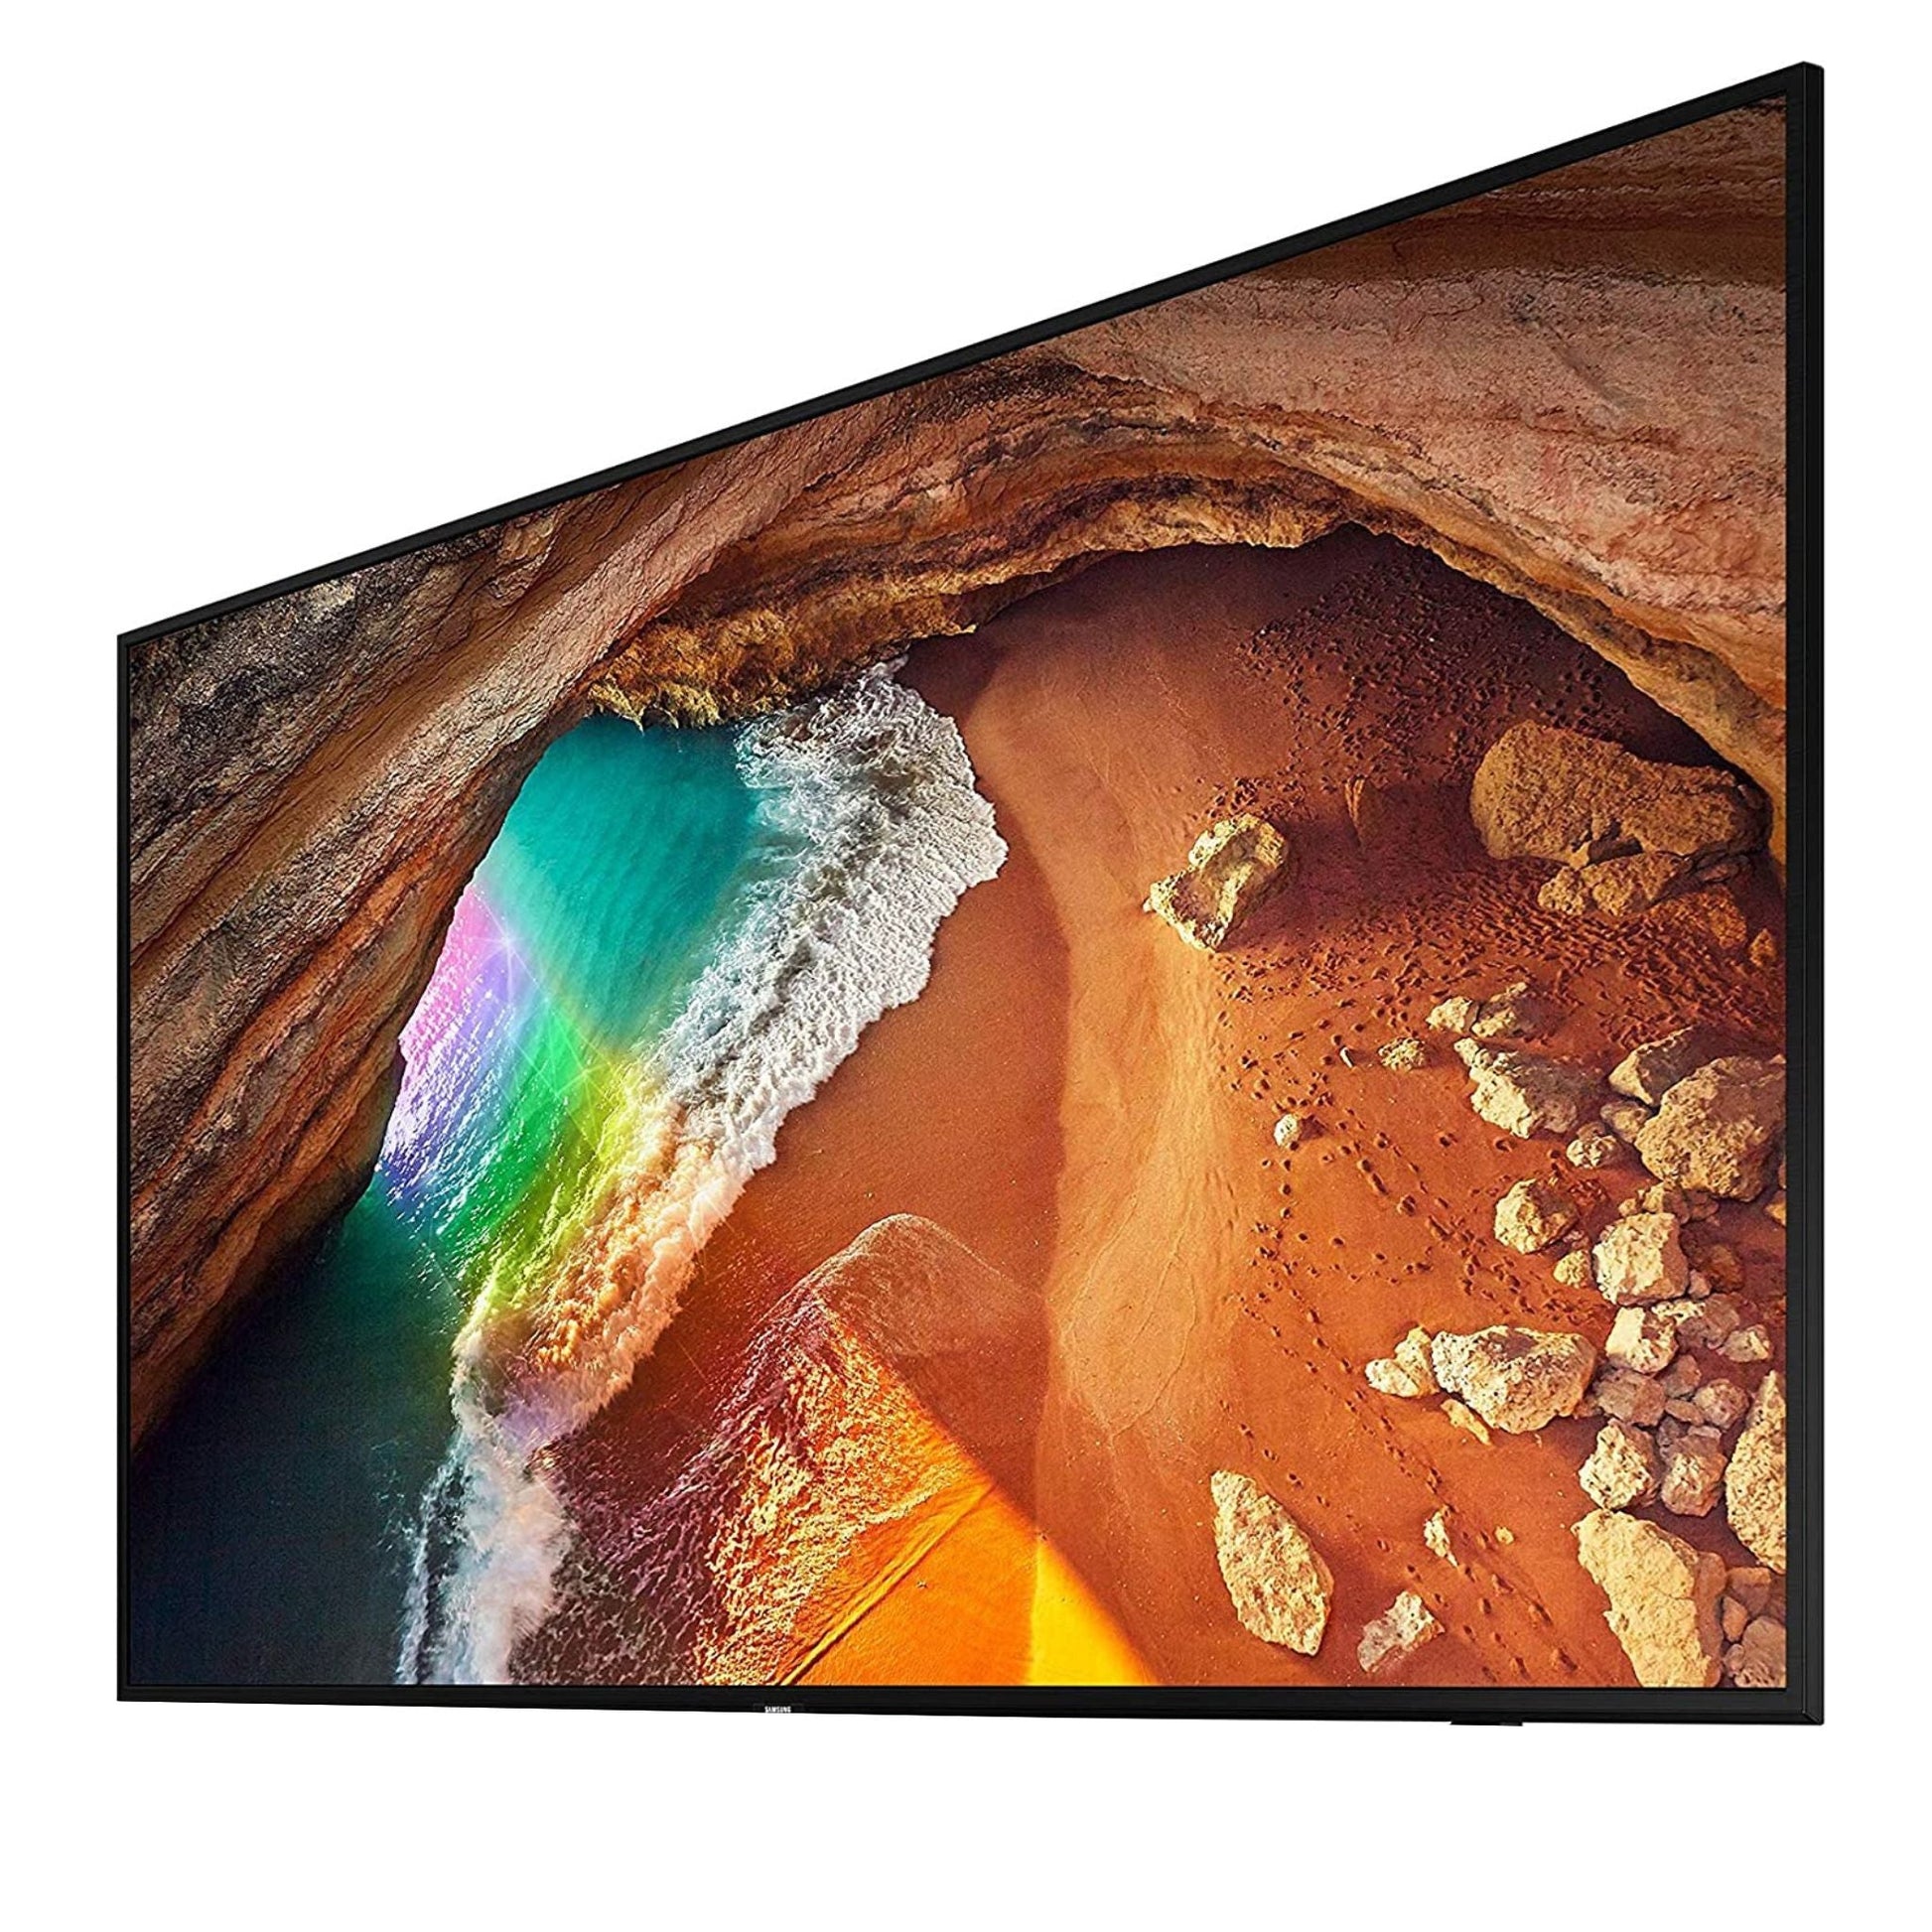 Samsung 82 inch Smart QLED TV, 82Q70R